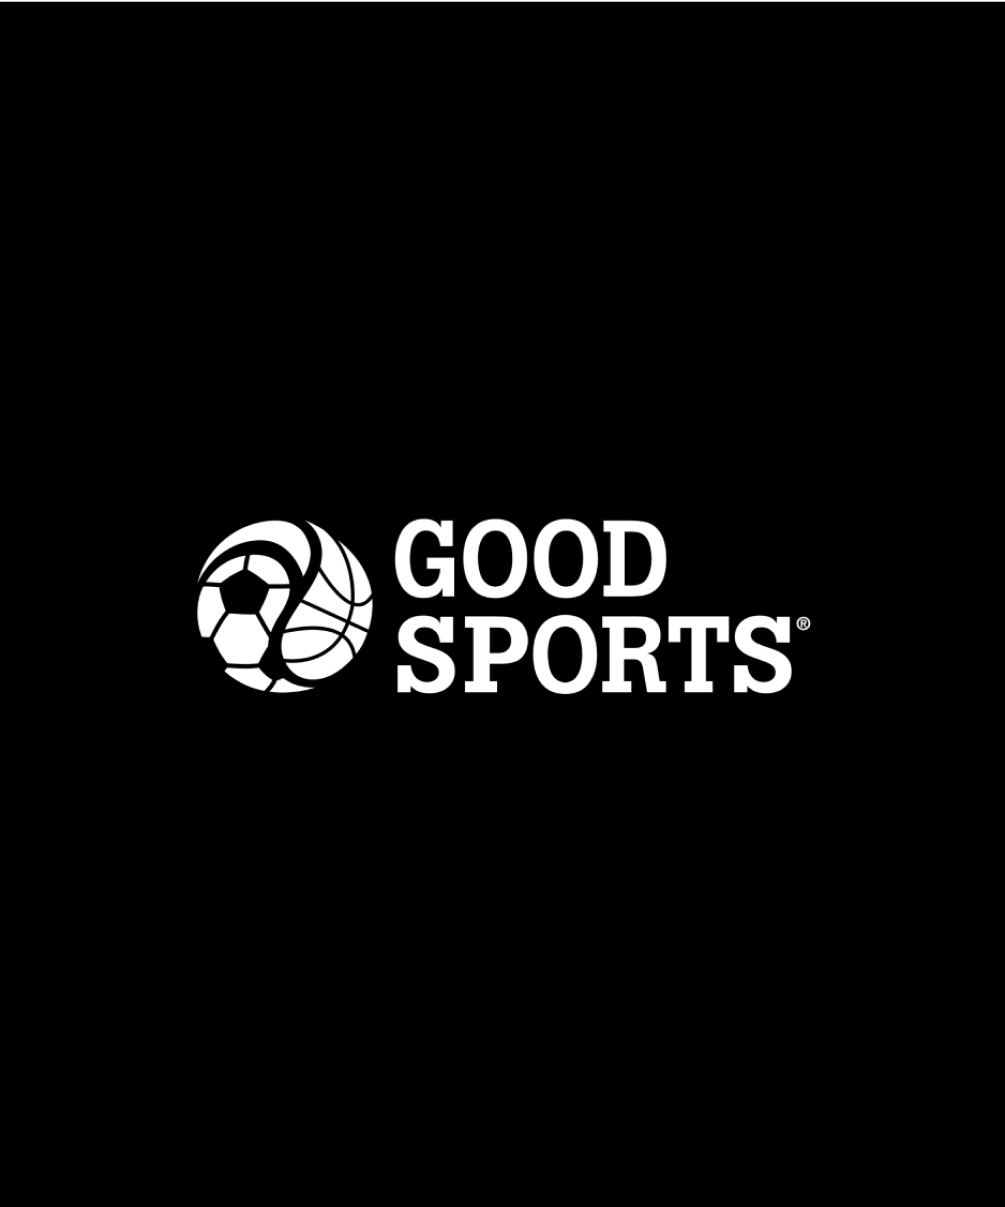 Good sports logo